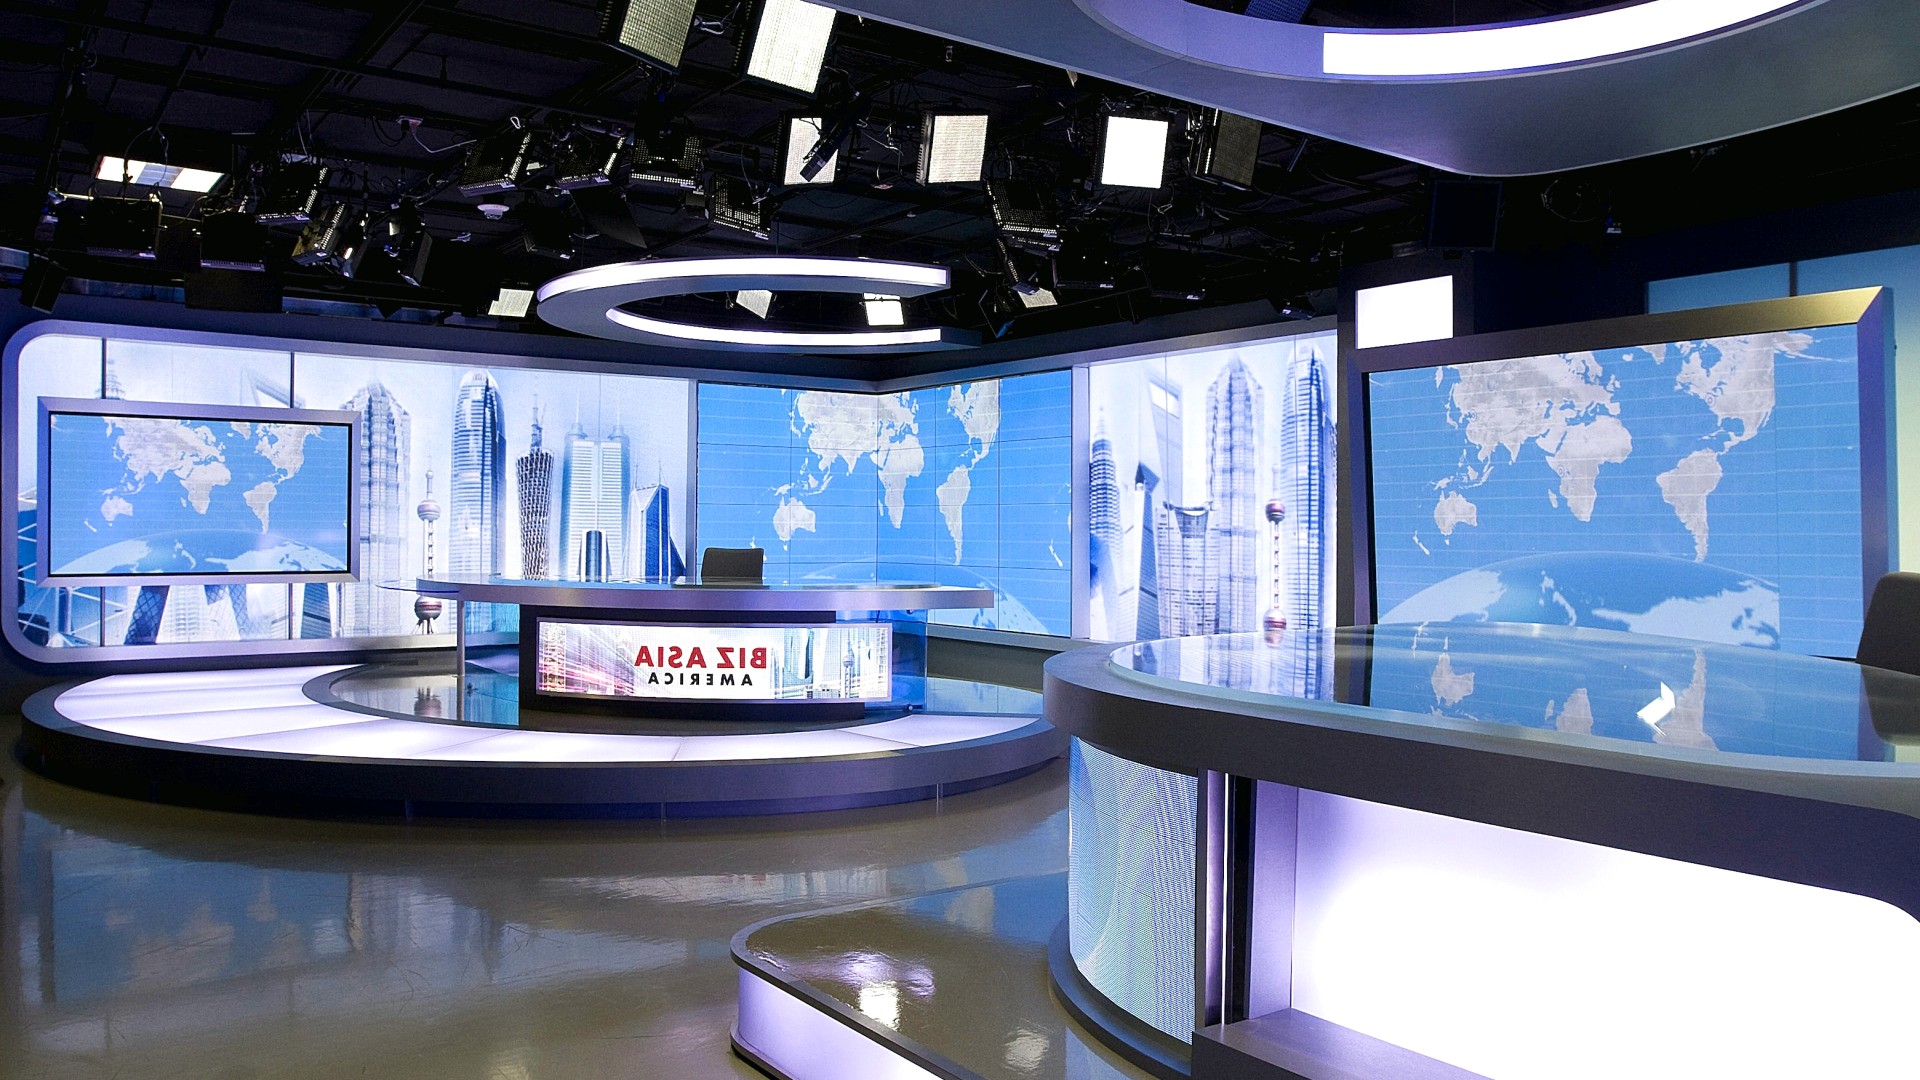 picture: studio de televiziune, interior, design, stil (image)